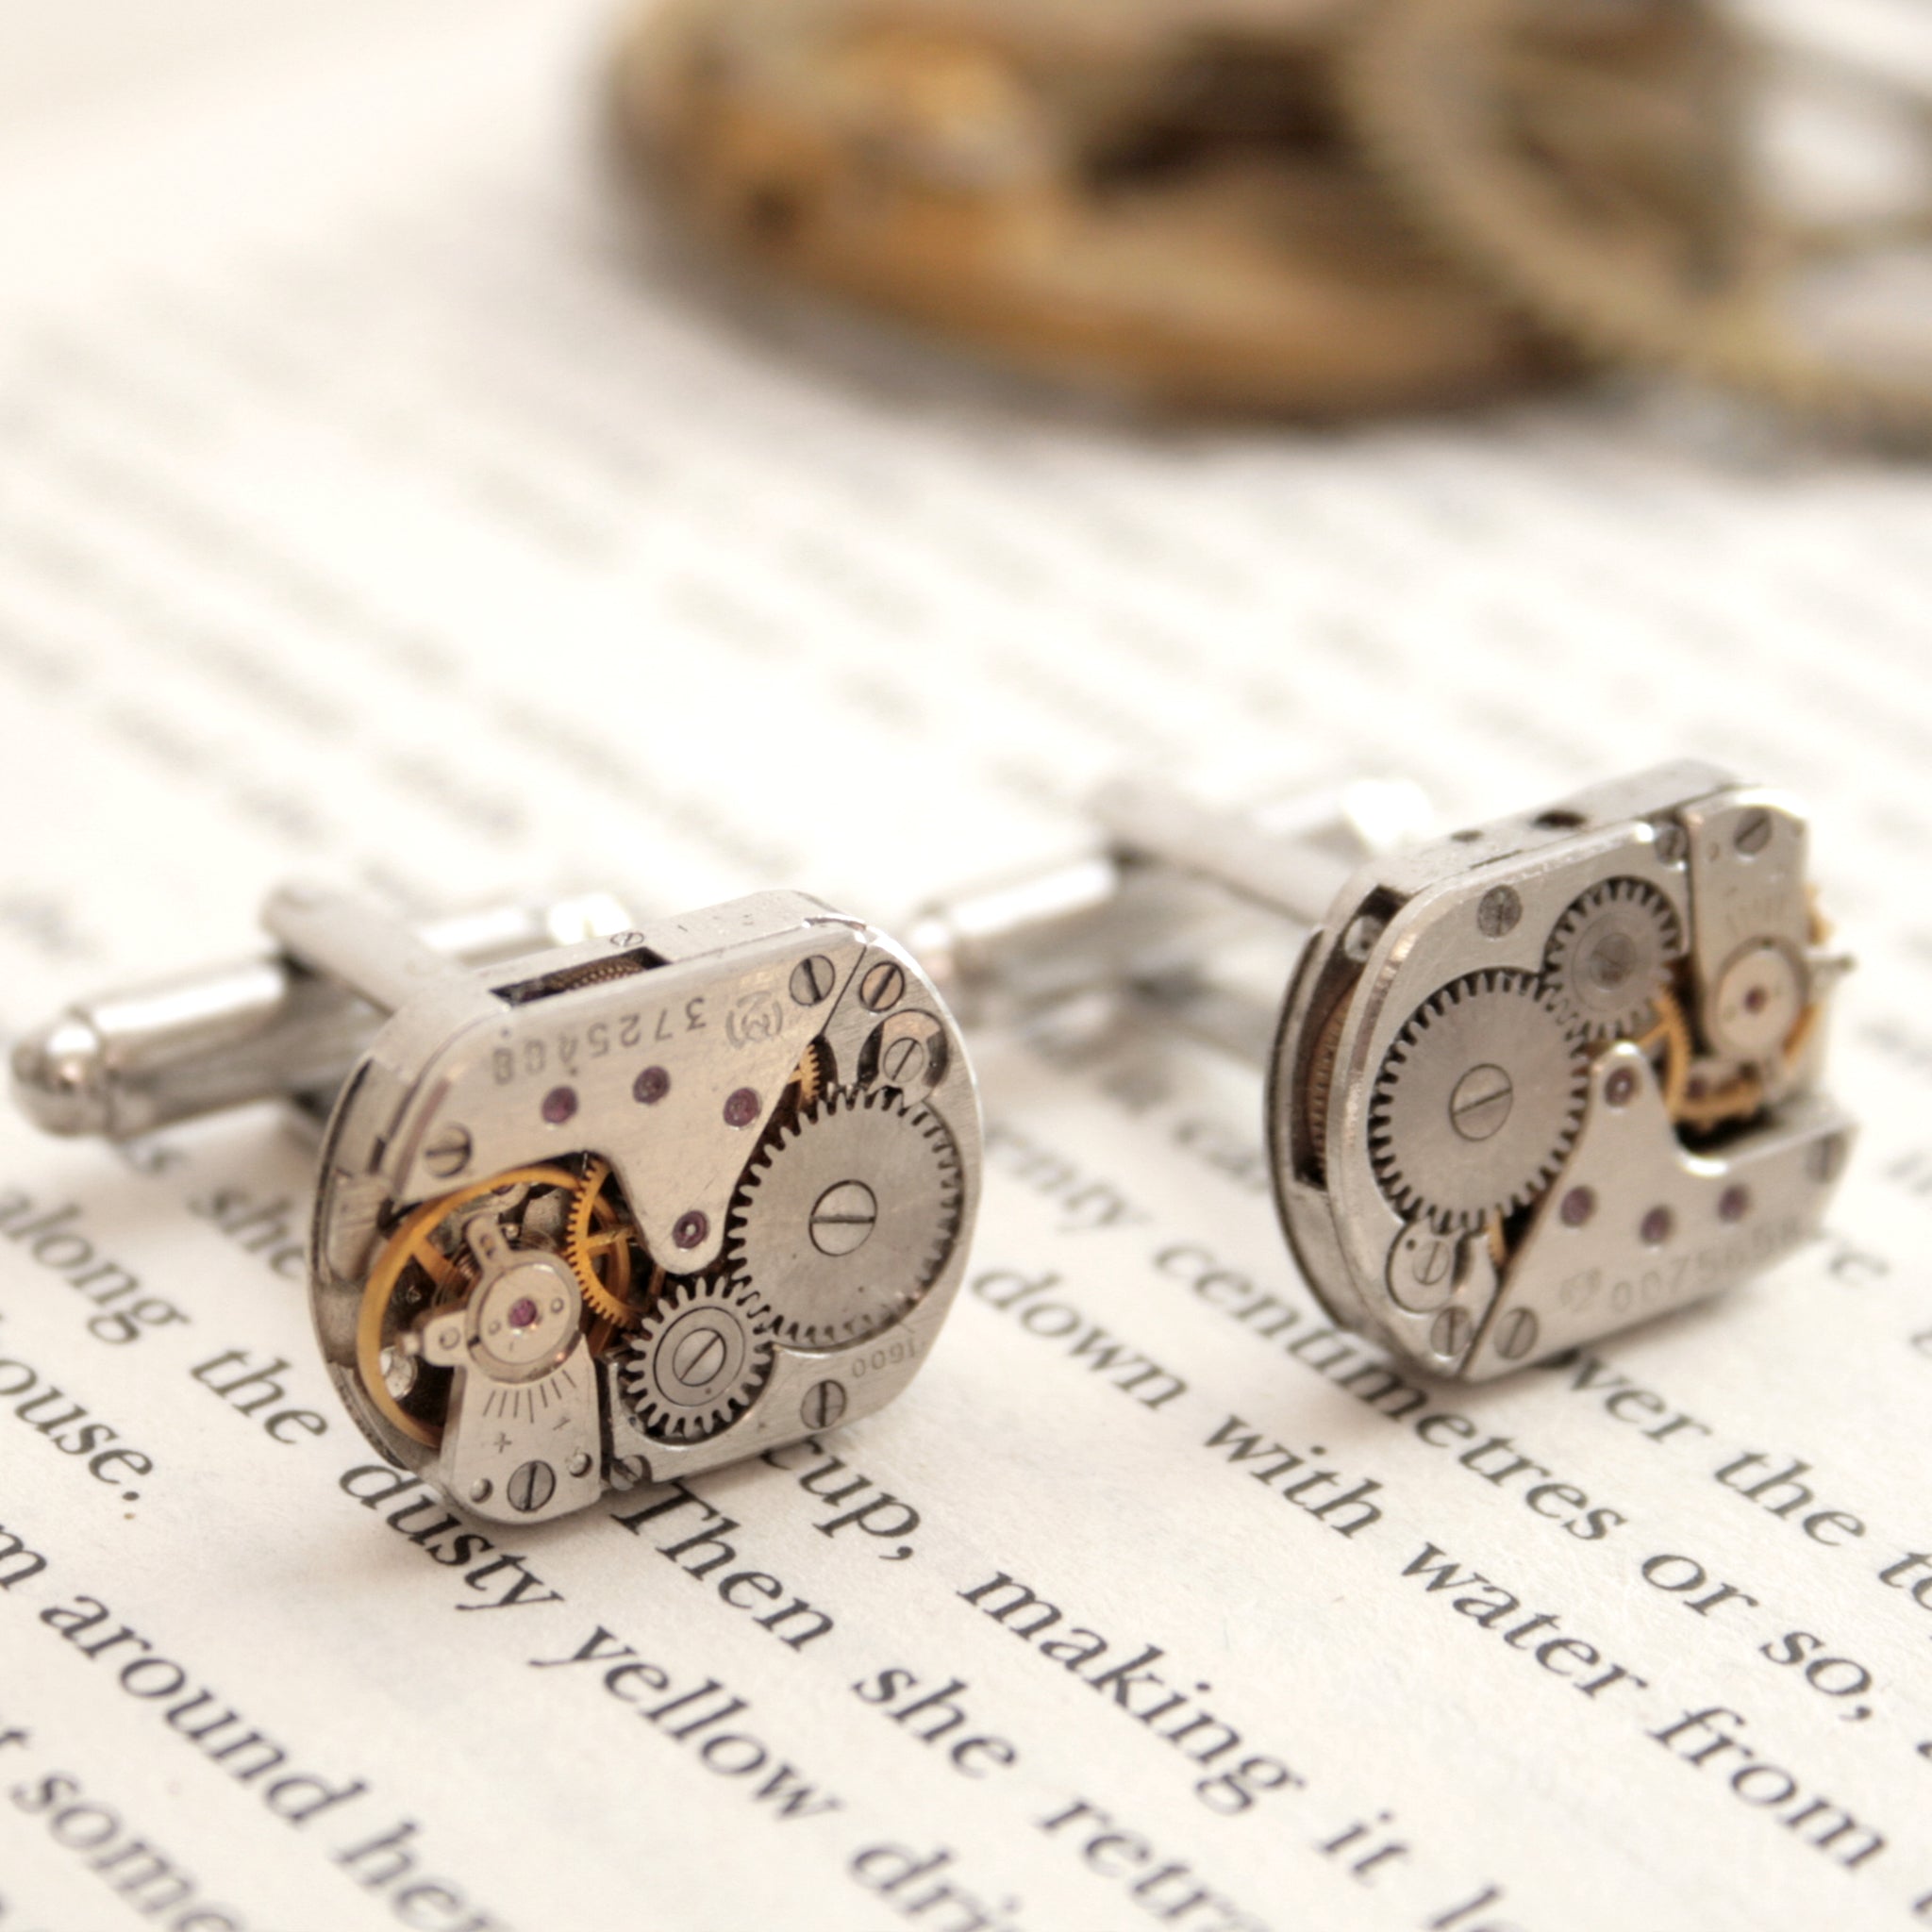 Steampunk Cufflinks for Men featuring antique watch movements